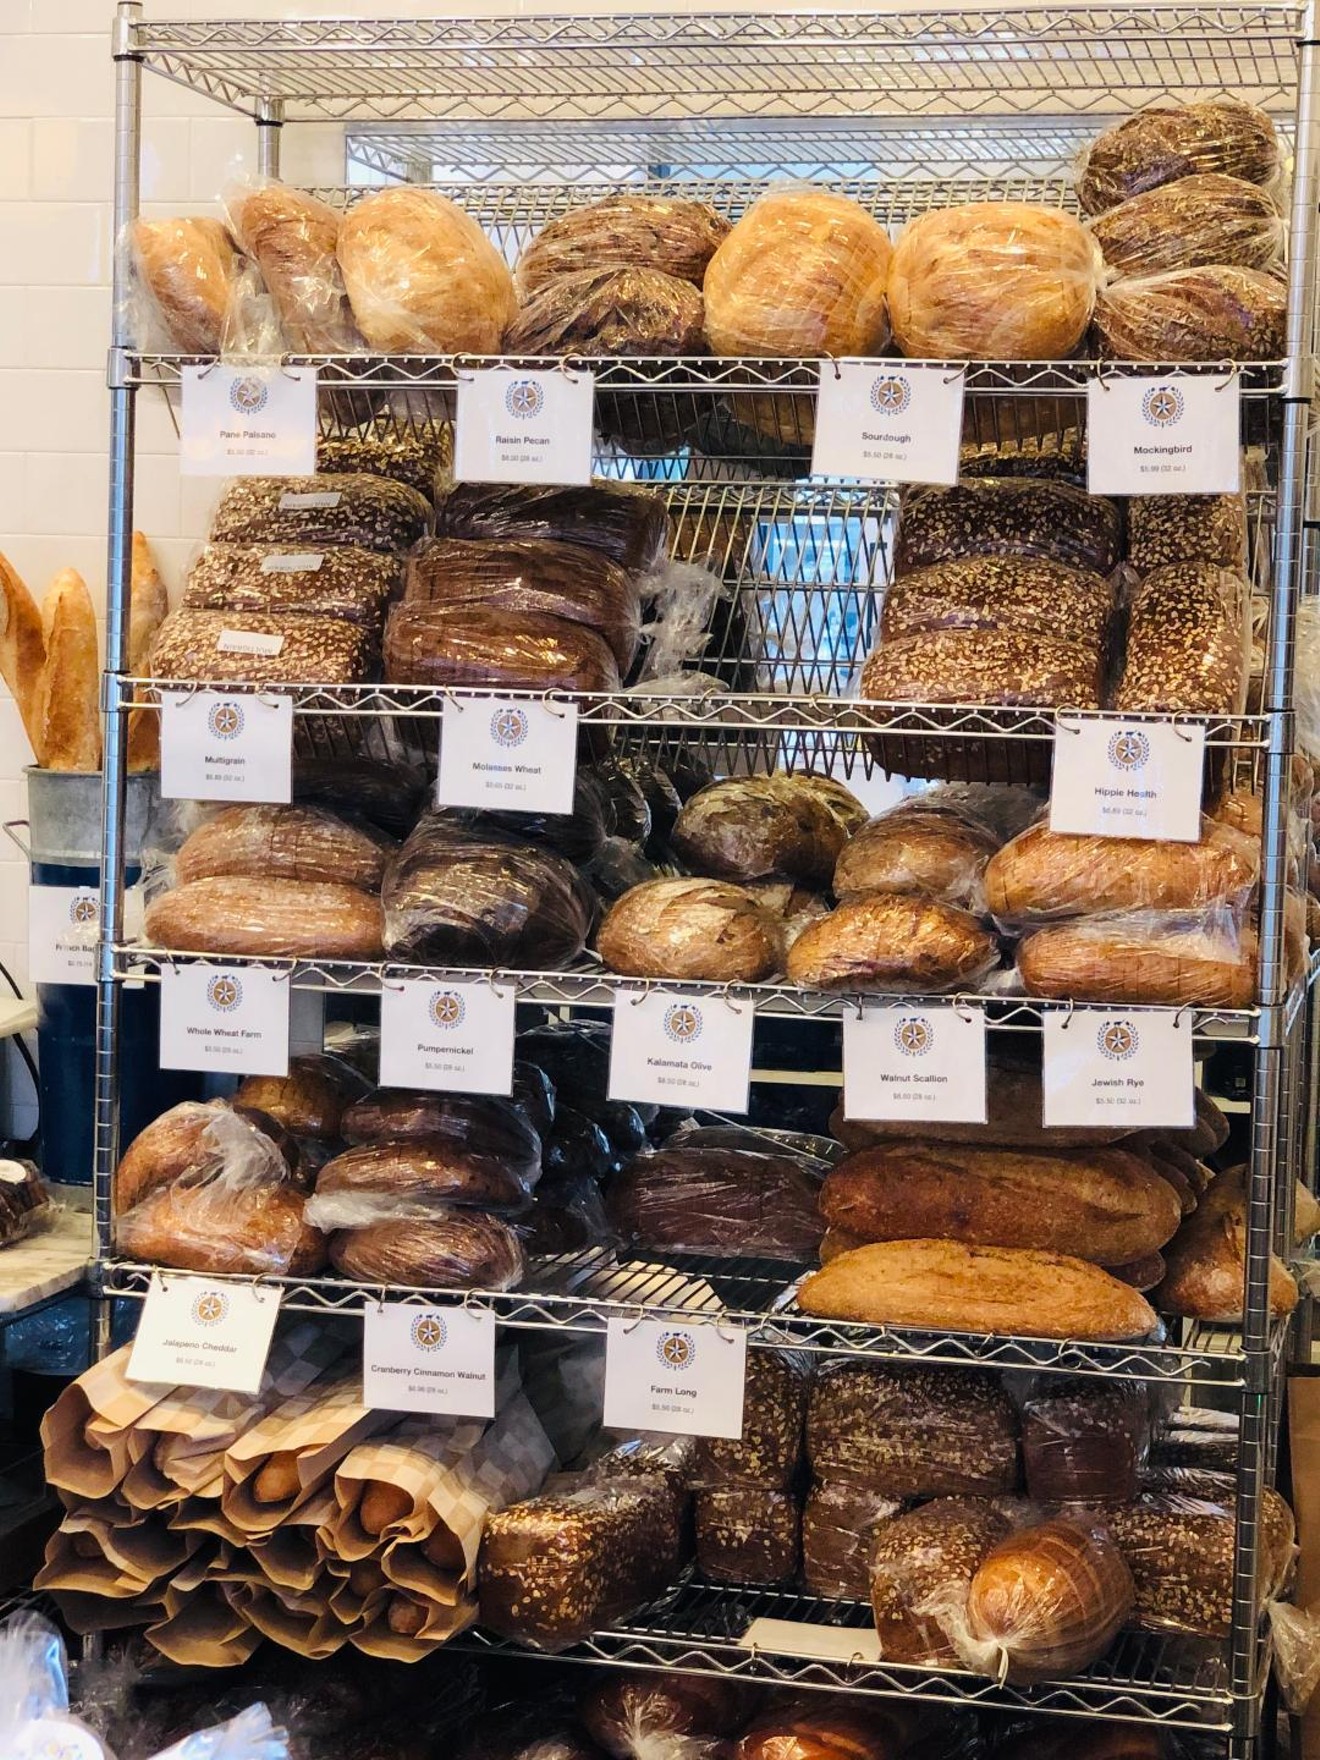 Shelves and shelves of bread